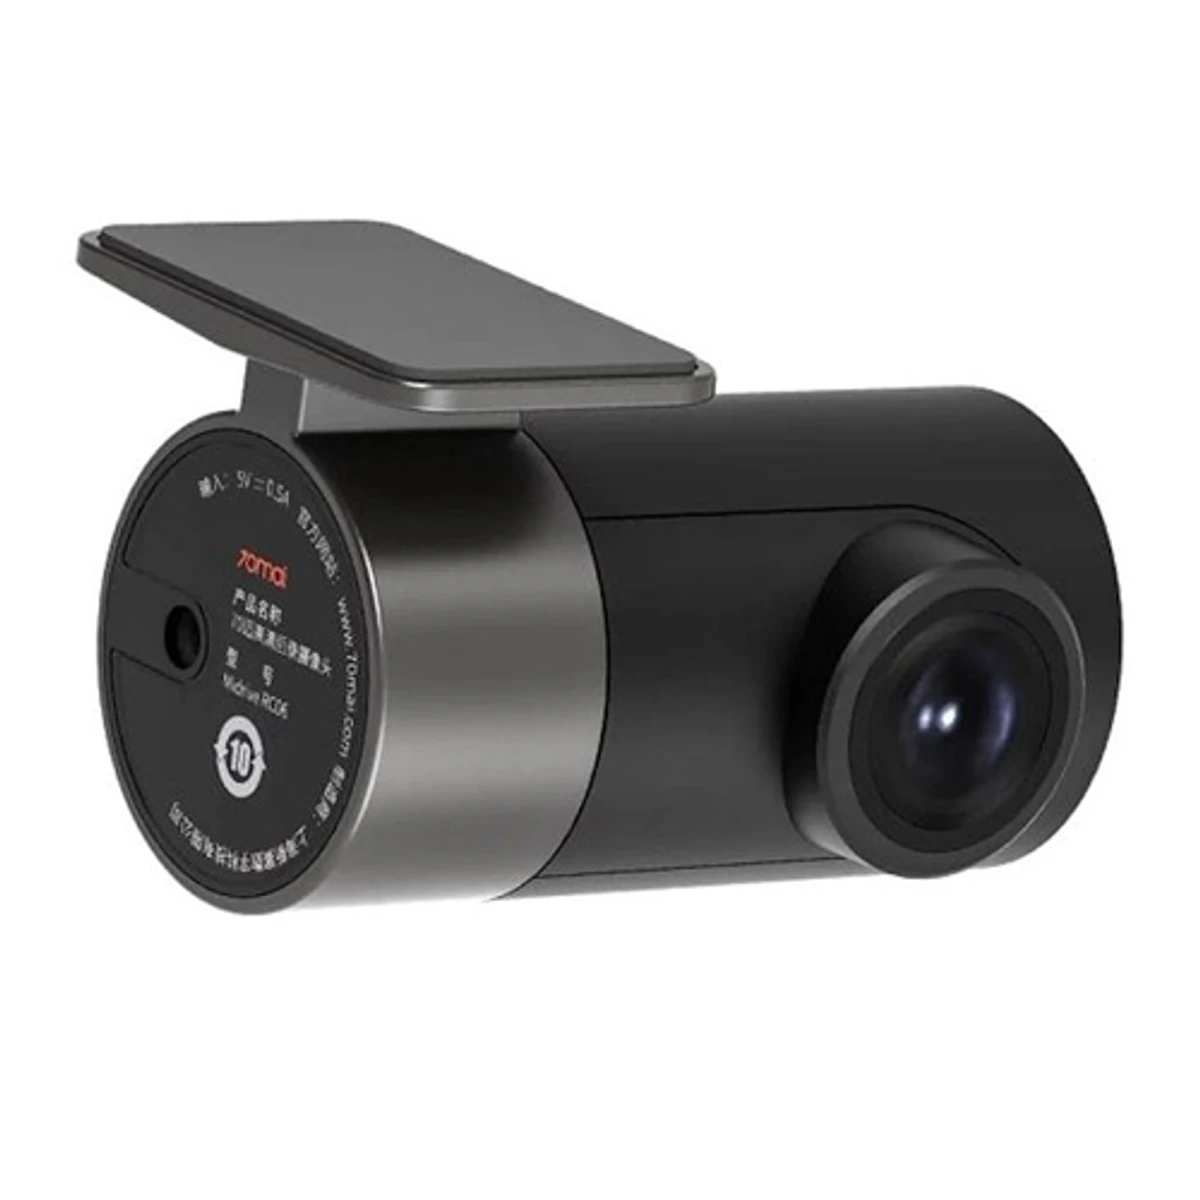 70Mai A800s 4K Ultra HD Dash Camera With Rear Camera Rc06 1080P (Global Version)